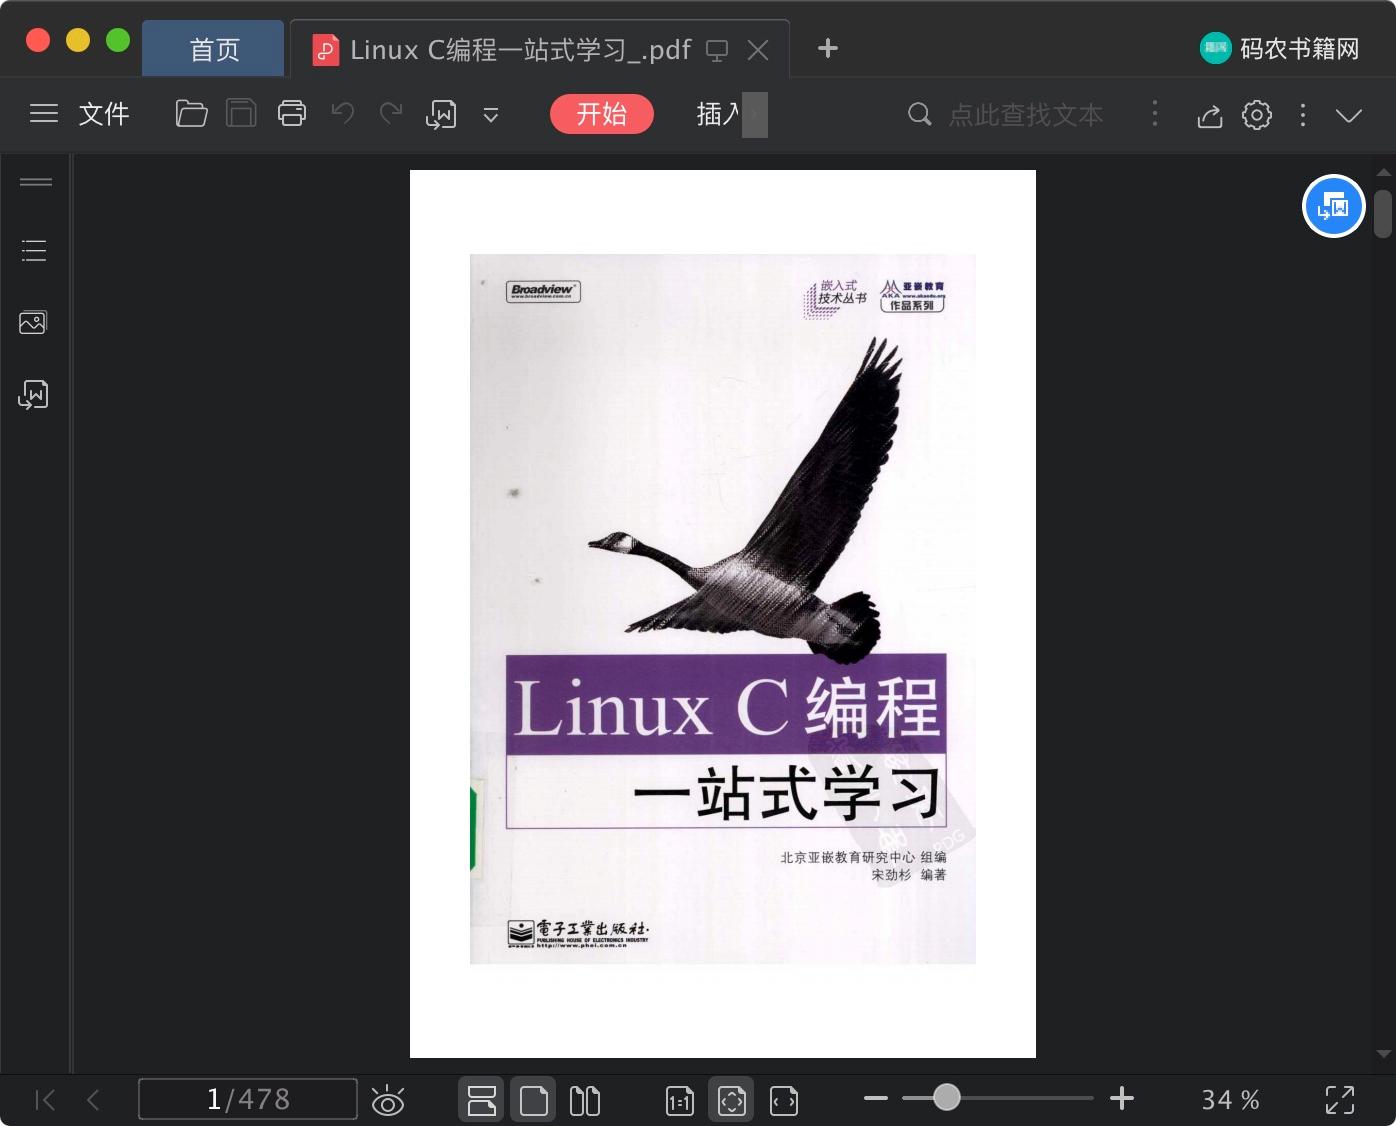 Linux教程 C编程一站式学习pdf电子书籍下载百度网盘